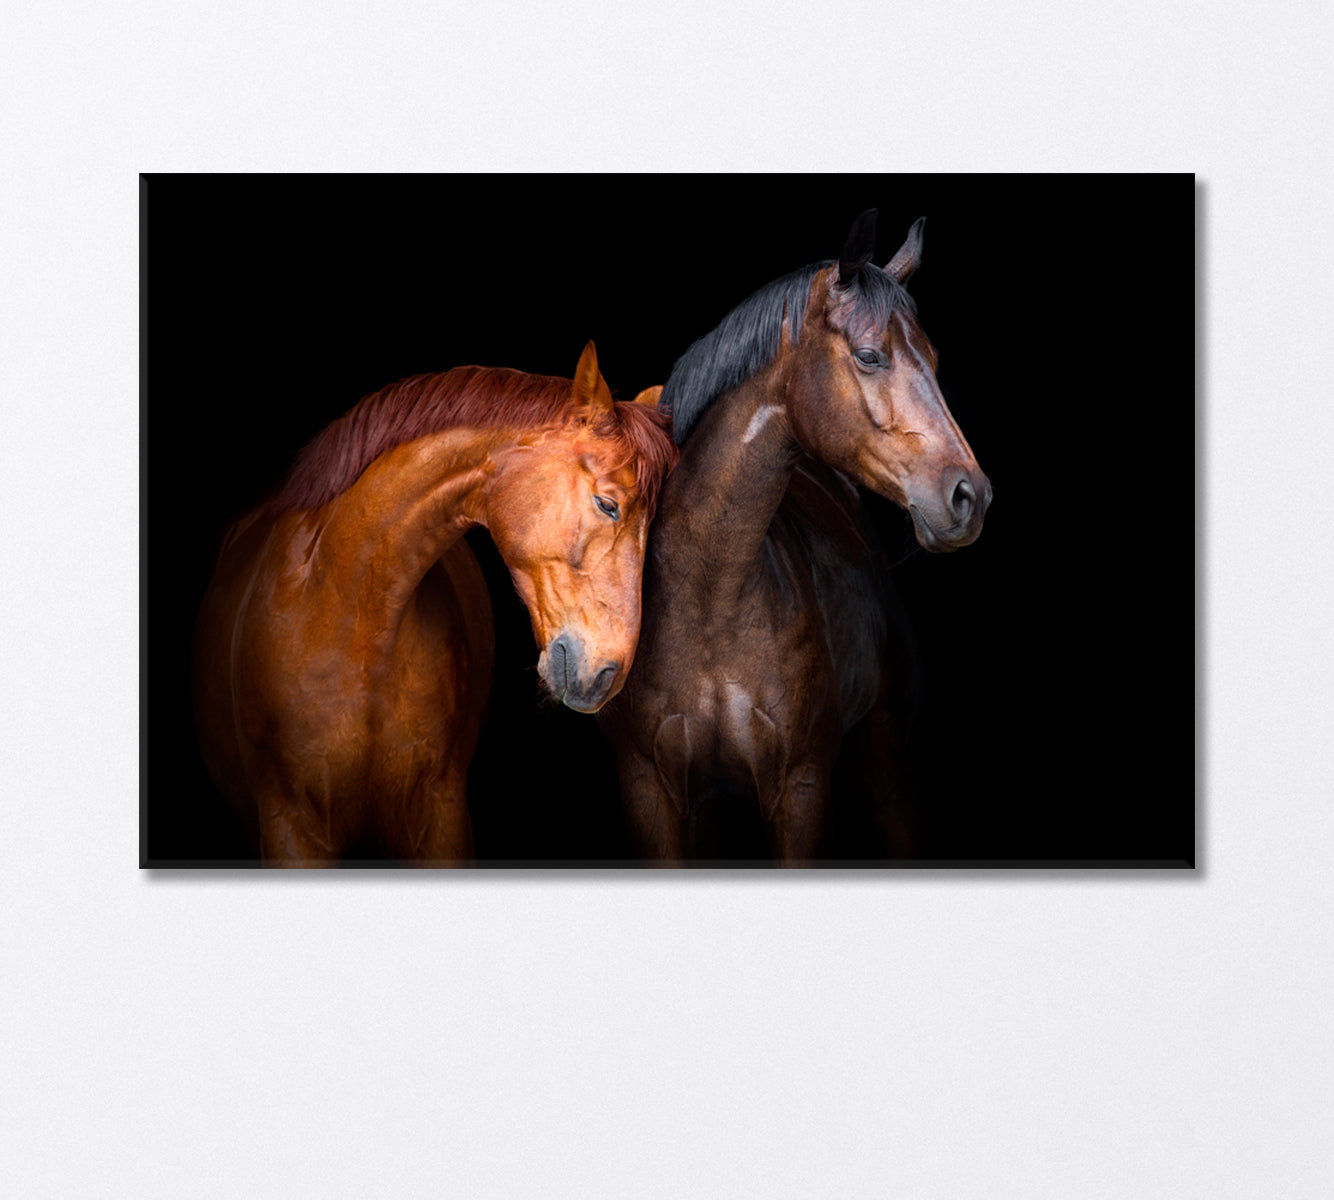 Two Horse Close Up Canvas Print-Canvas Print-CetArt-1 Panel-24x16 inches-CetArt